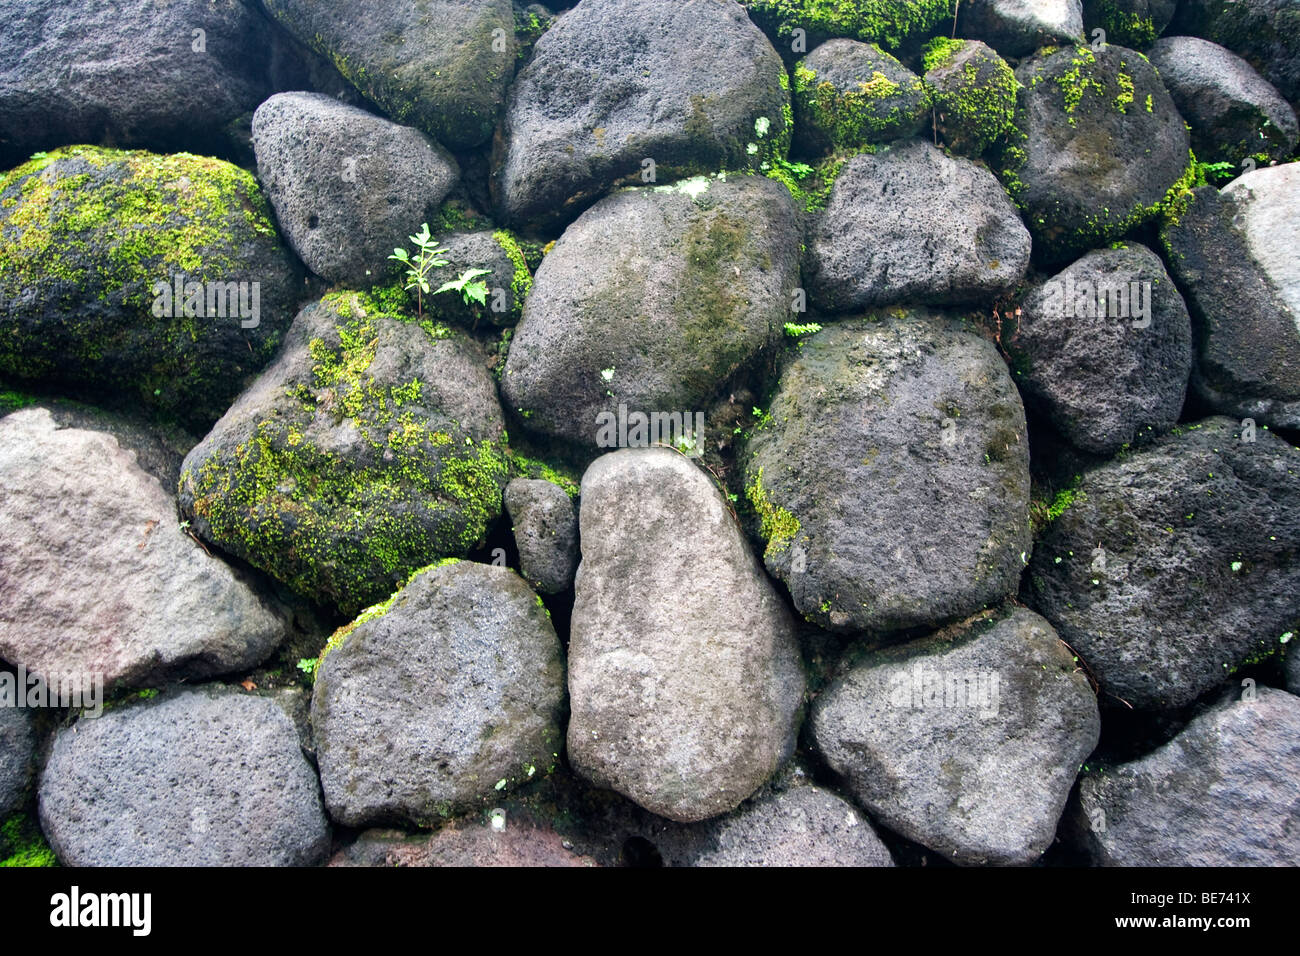 Vegetation growing on rocks. Stock Photo